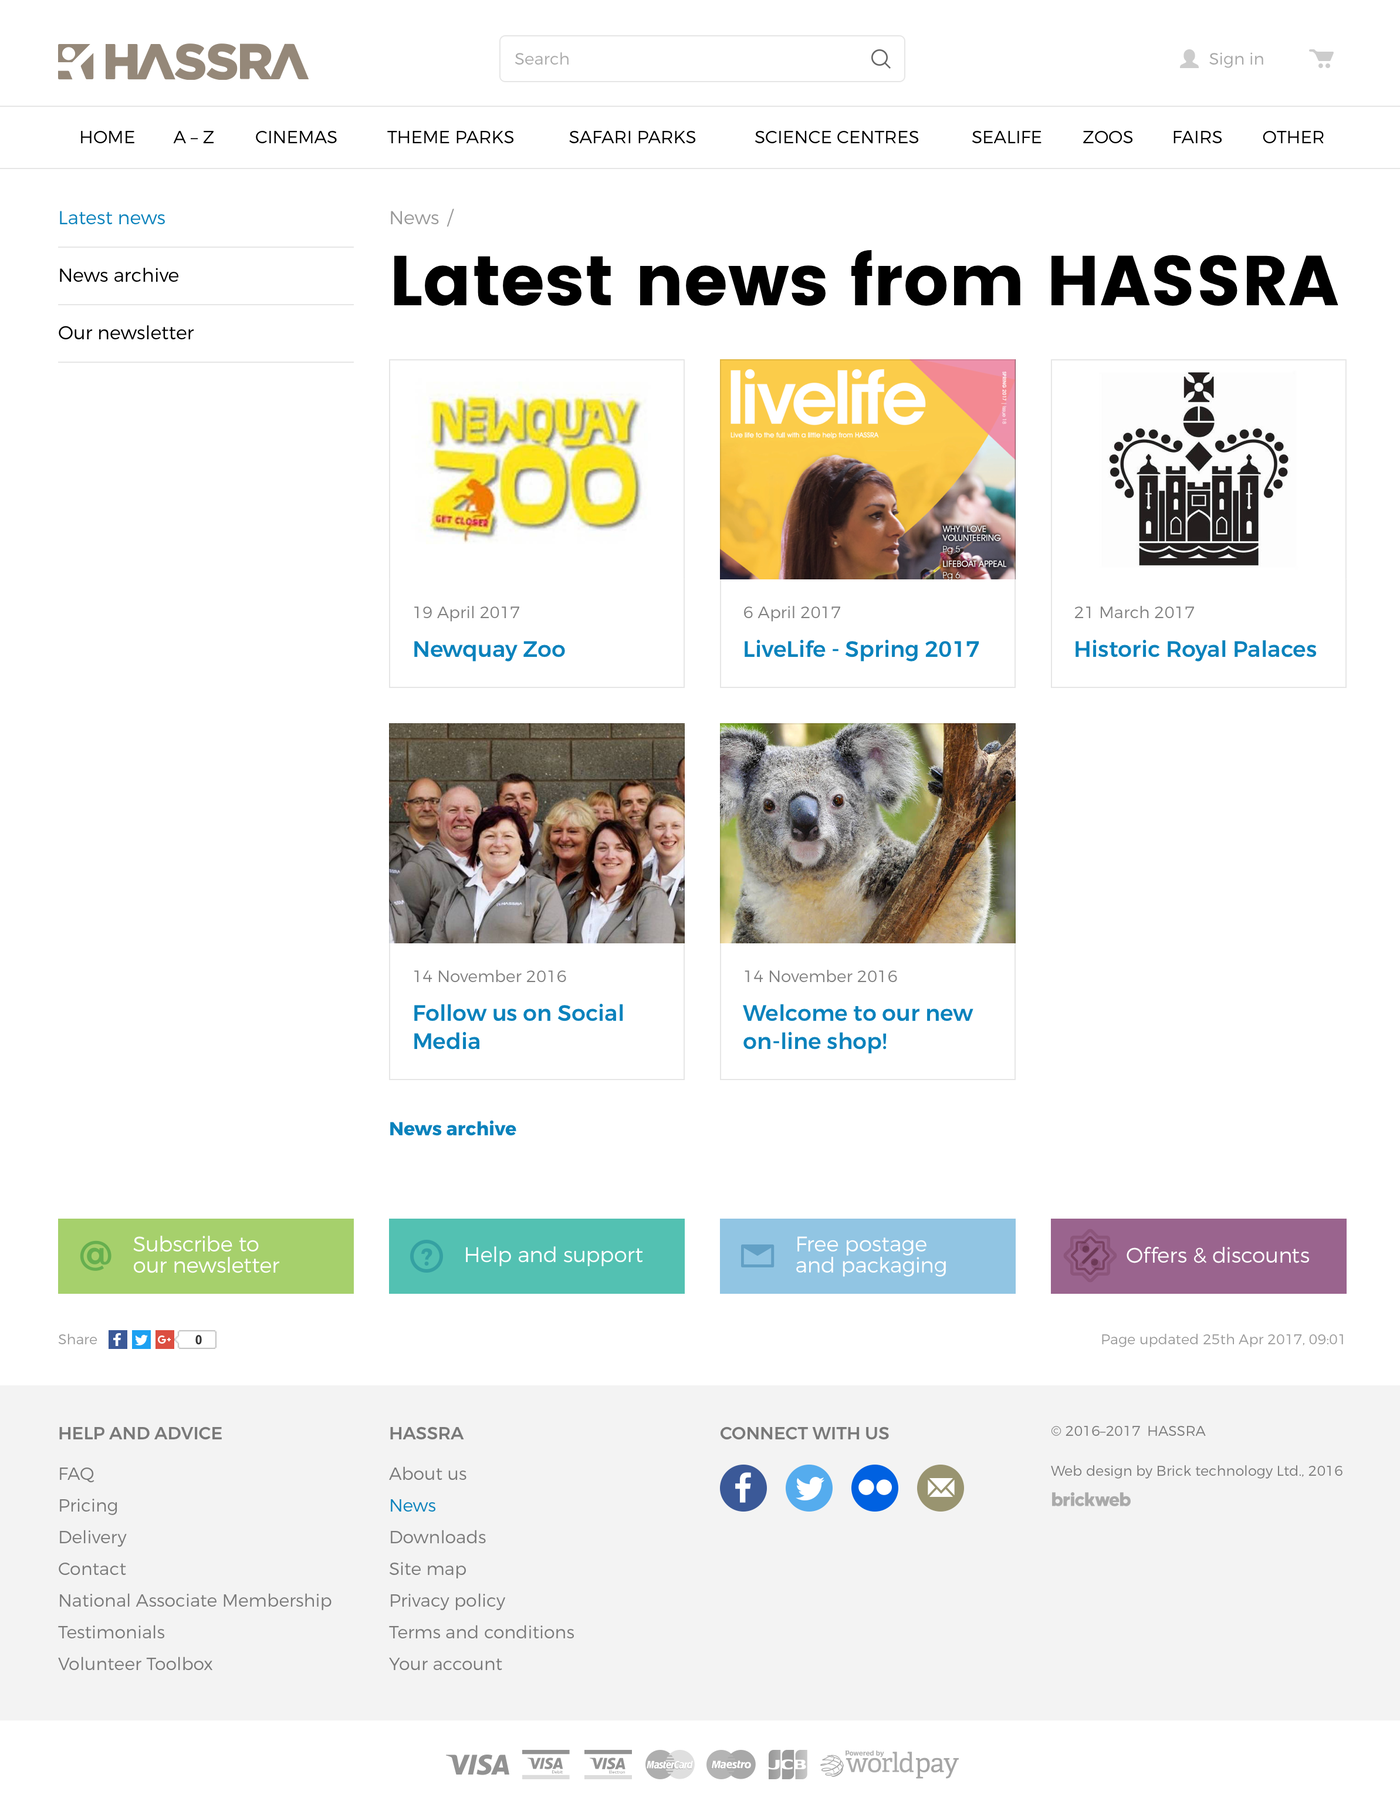 HASSRA's Online Shop (2017) News archive